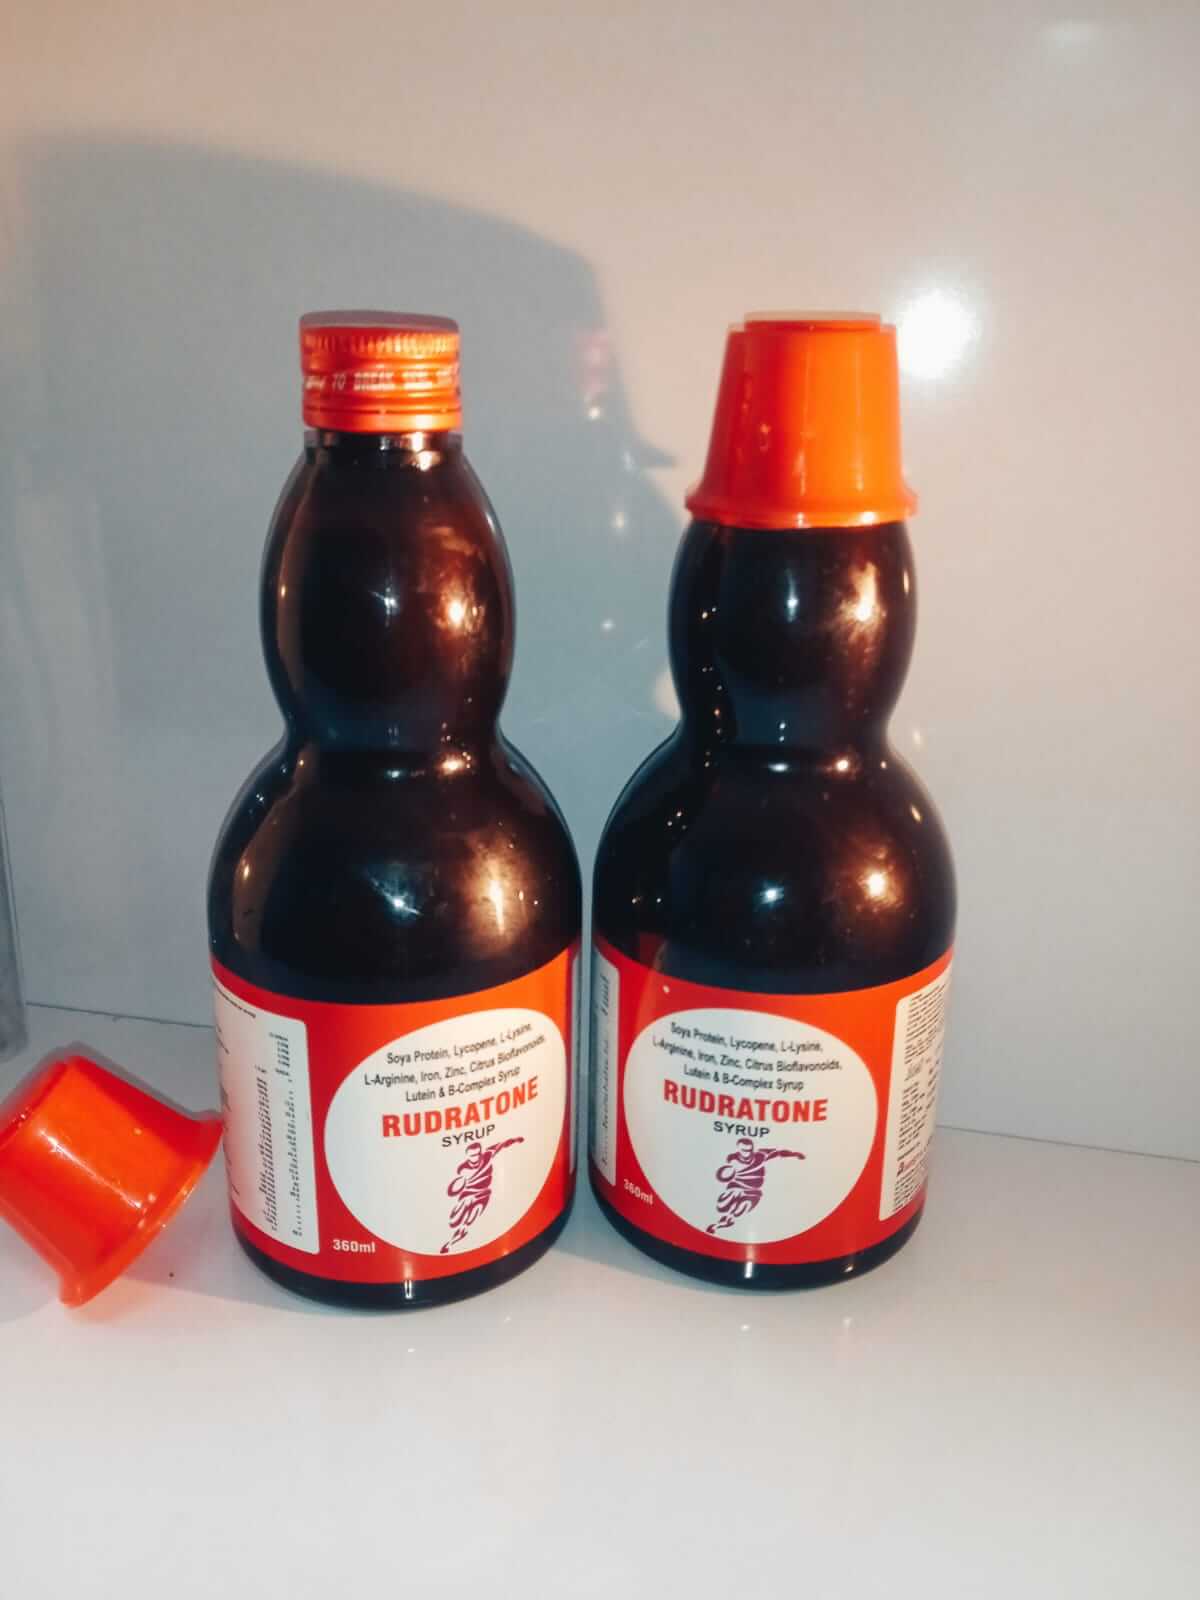 Rudratone Syrup